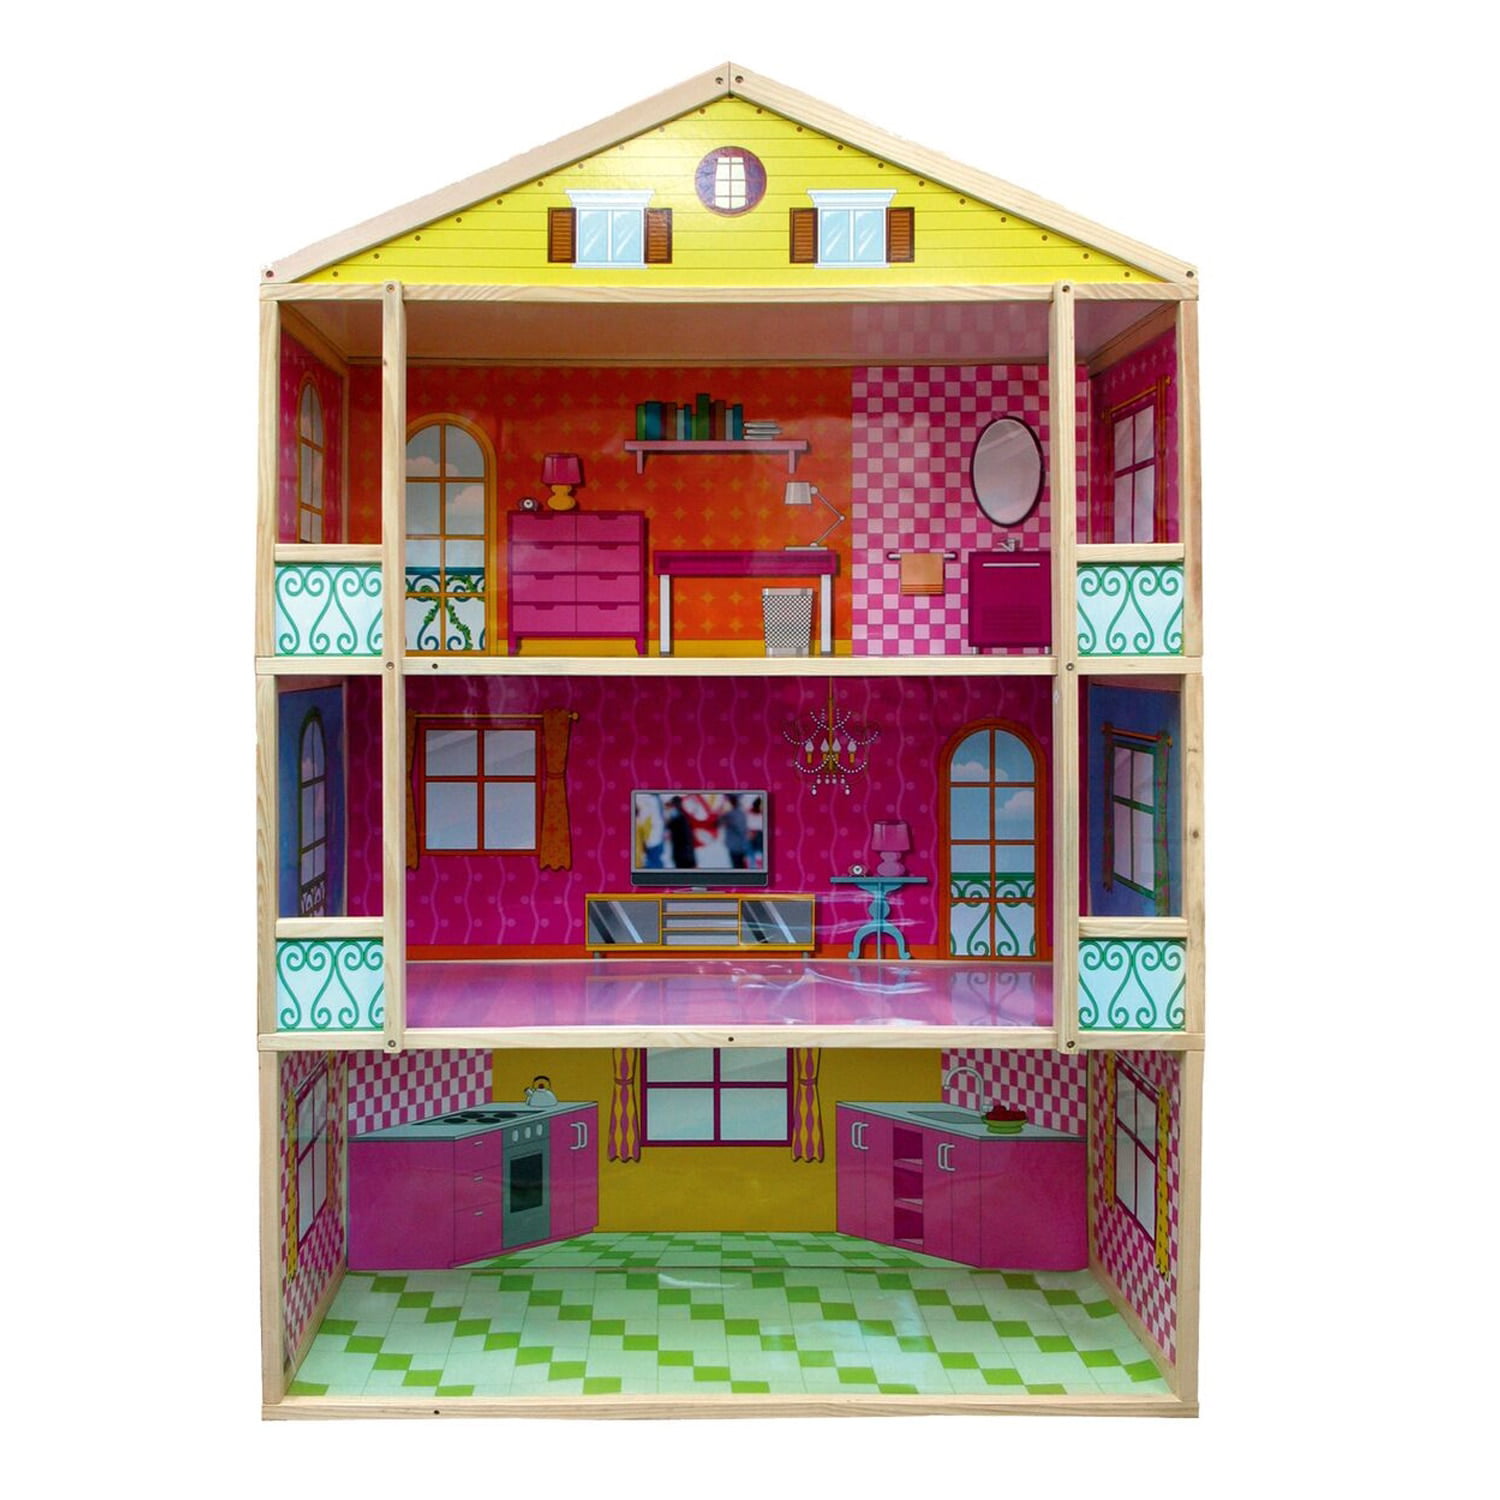 Giant 3-Story Dollhouse - Walmart.com 